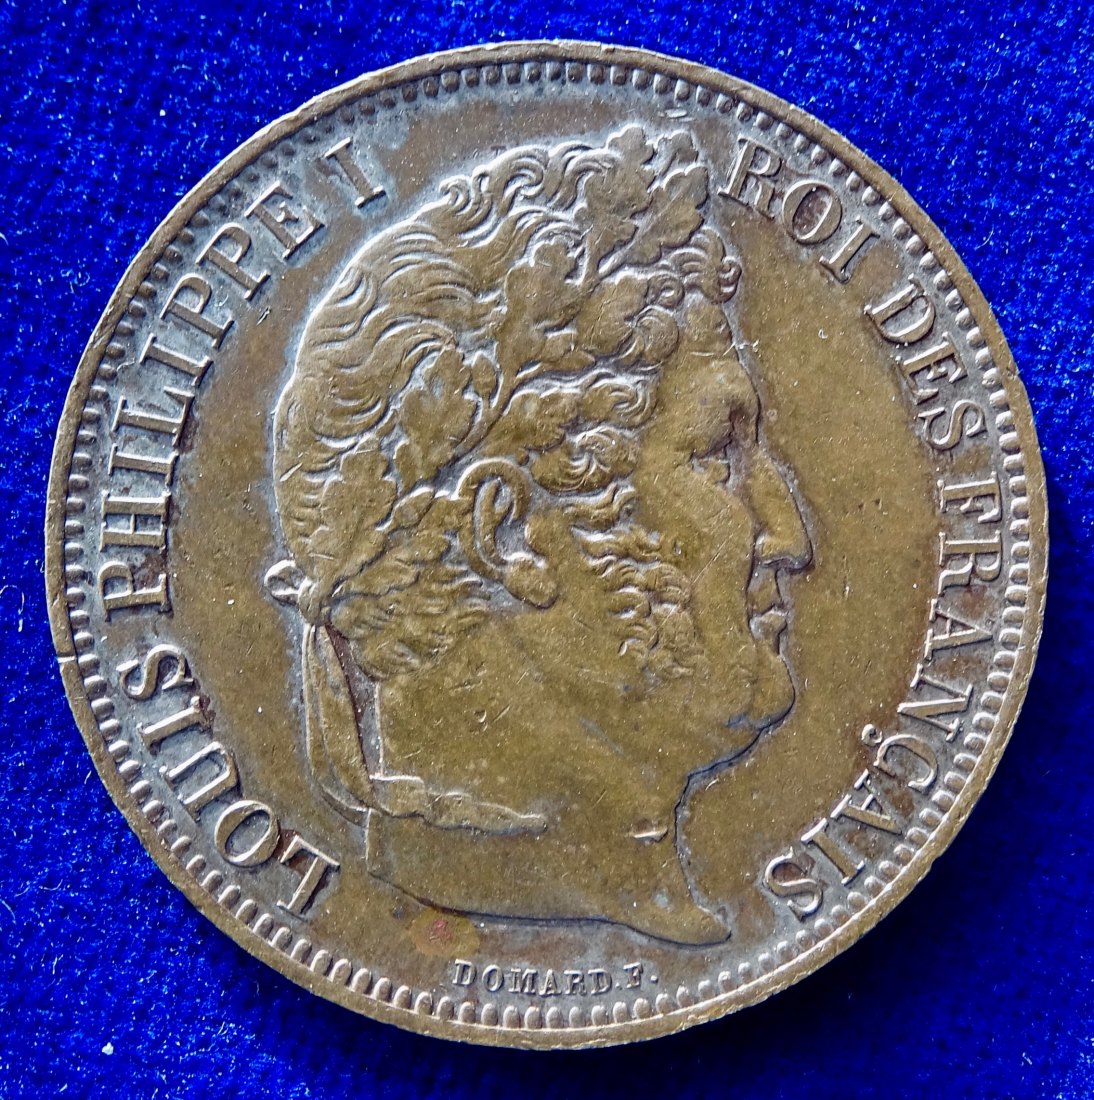  Frankreich 5 Francs 1831 Münzbesuch Cu-Münze   